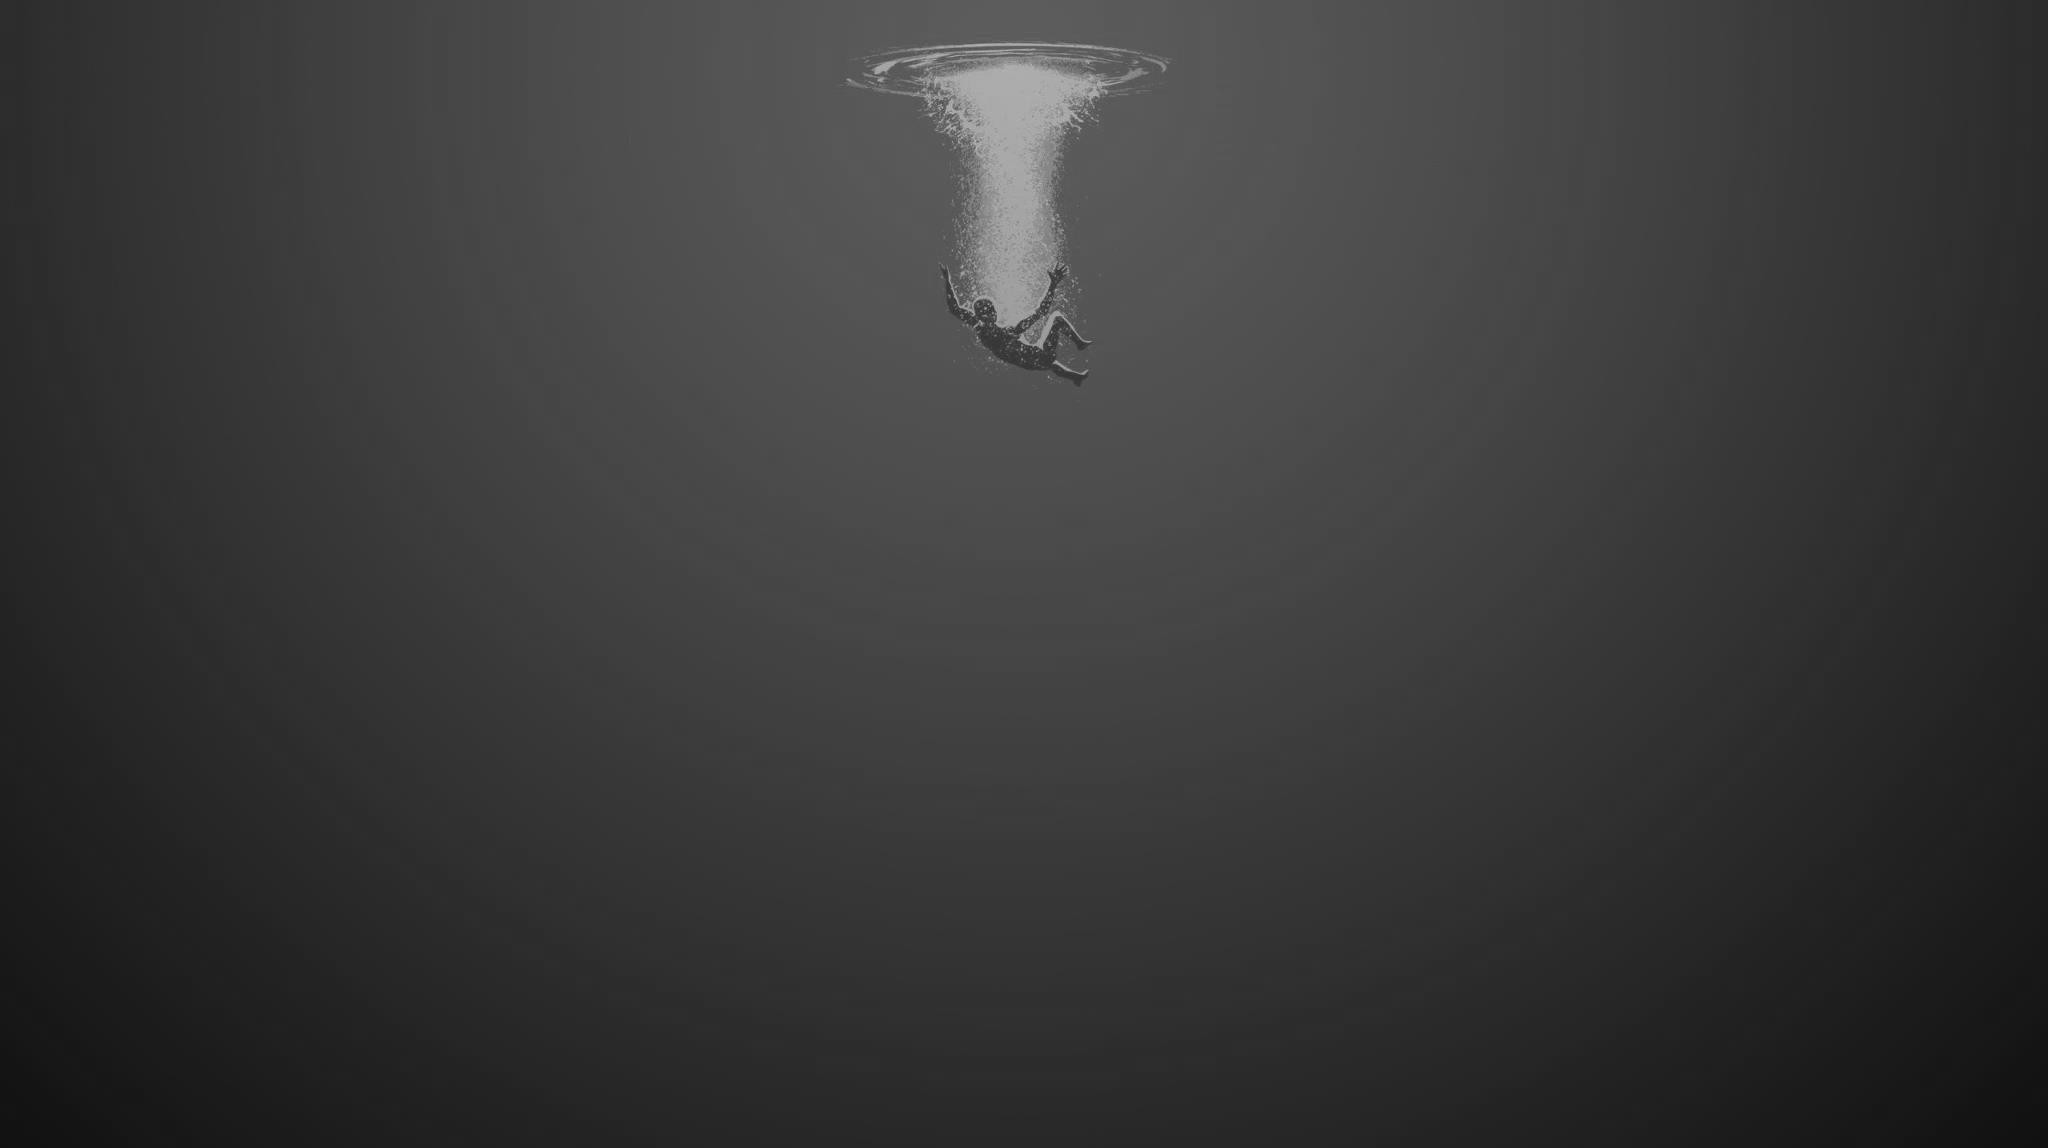 General 2048x1148 minimalism water gray underwater simple background monochrome